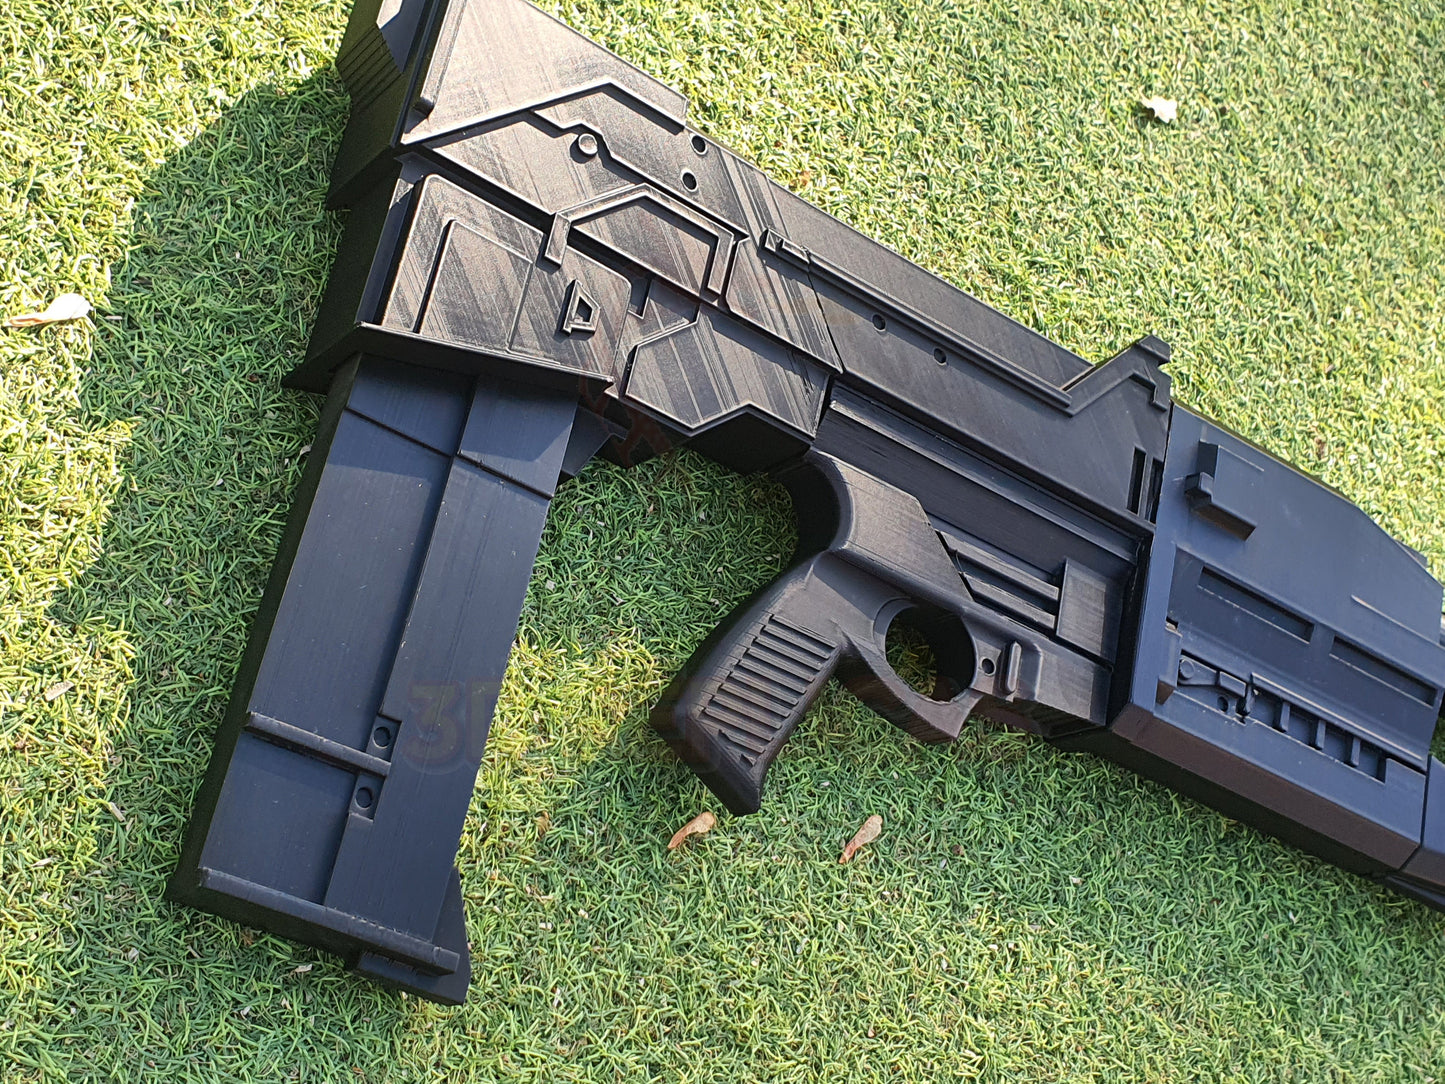 Terminator Westinghouse M95A1 Phased Plasma Gun 40 Watt Rifle Prop Replica Blaster Cosplay